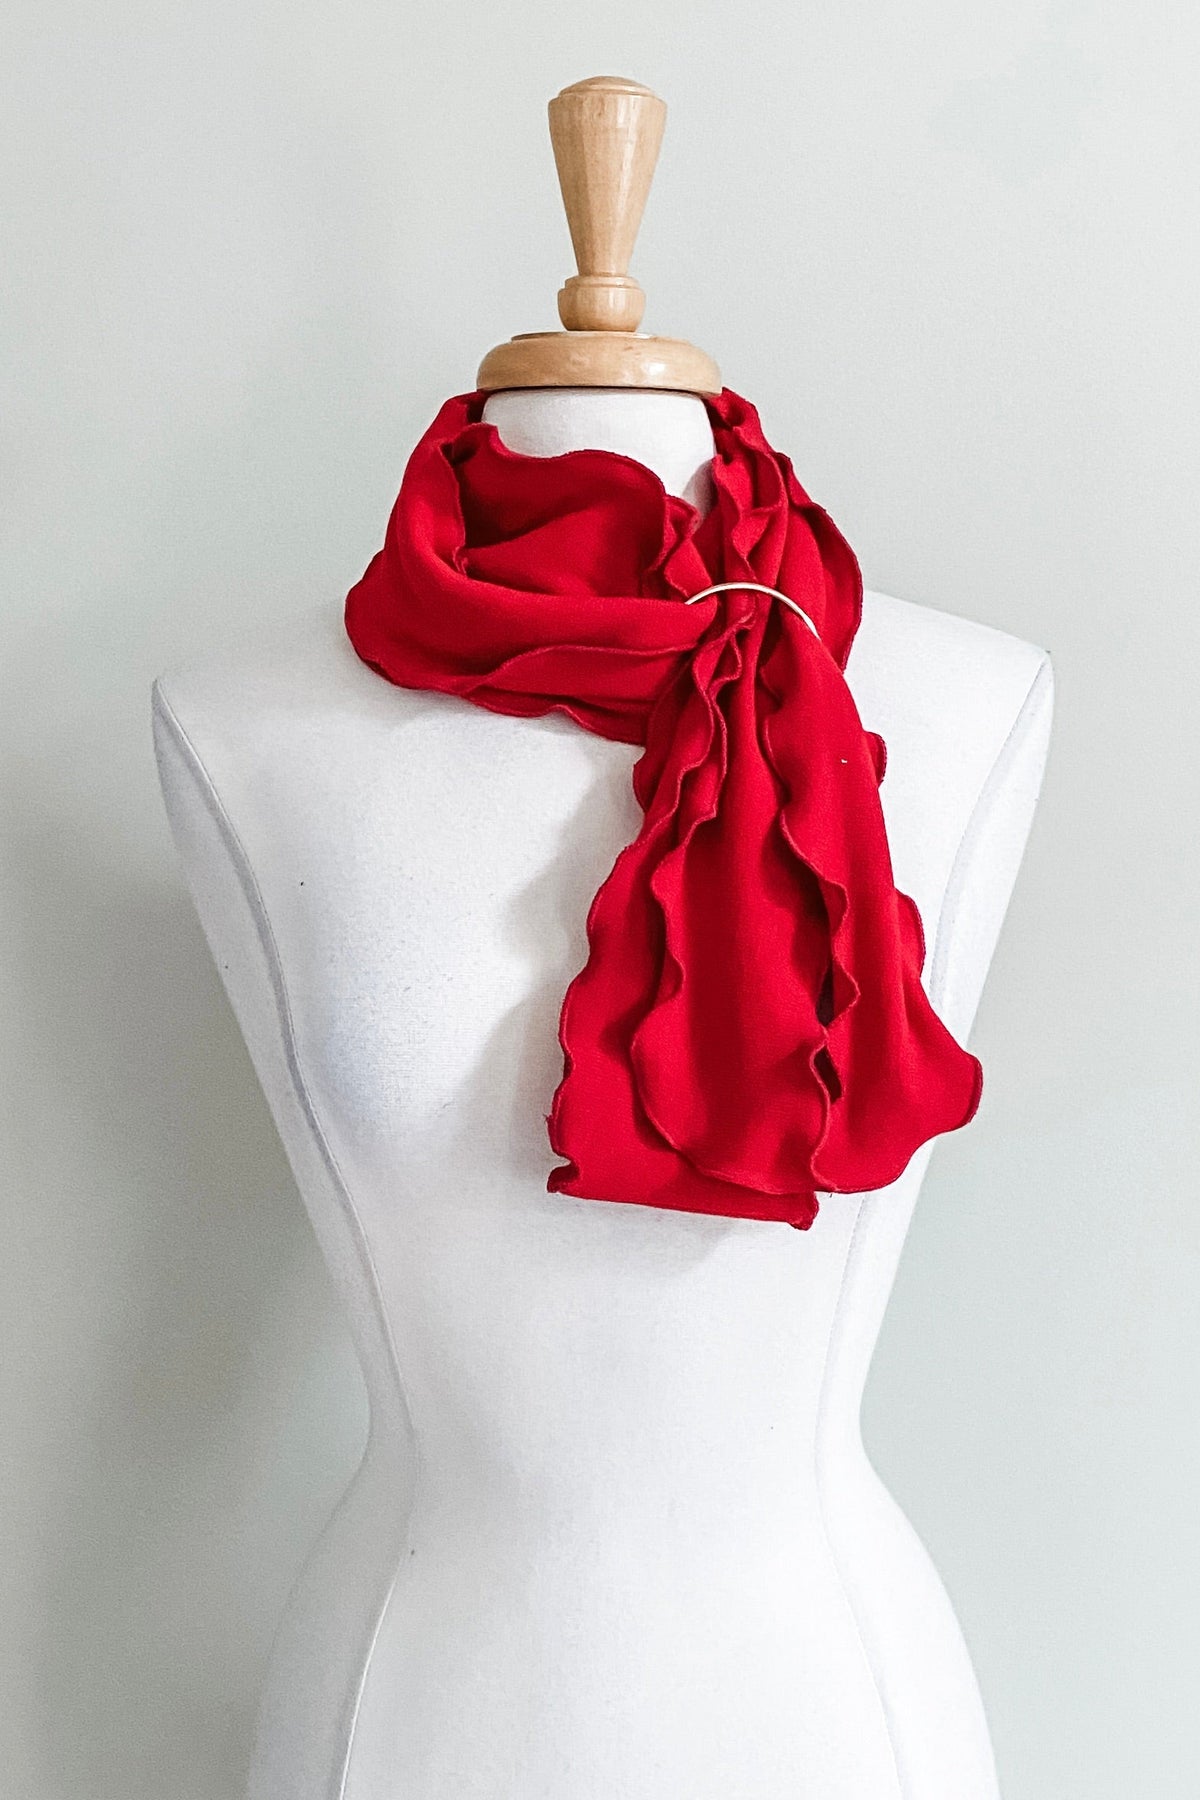 Matching Sash in Scarlet color from Diane Kroe